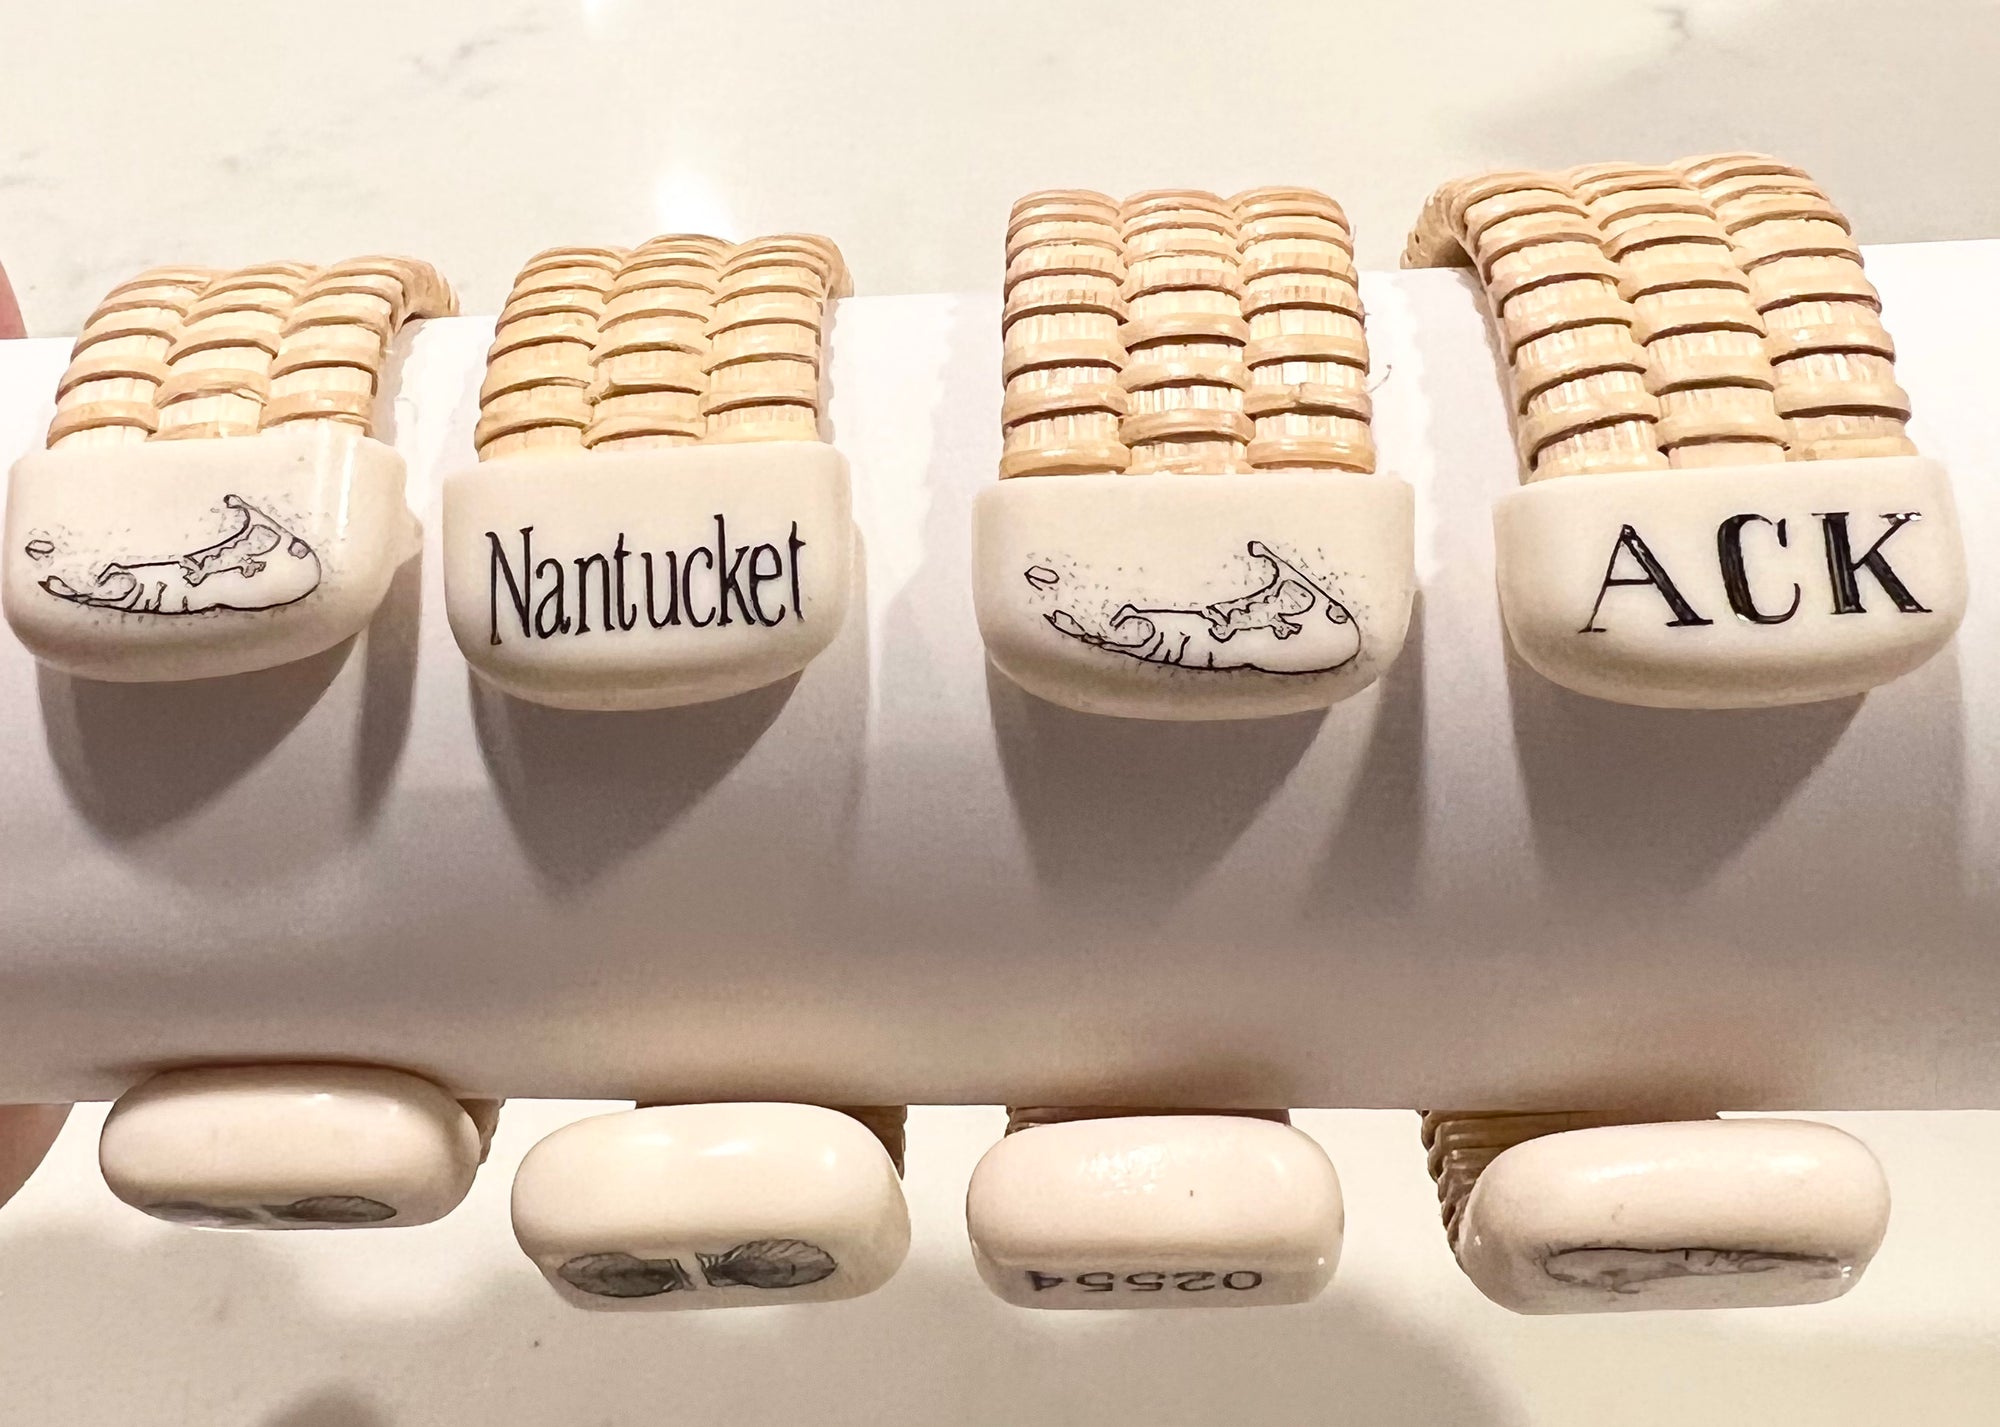 Woven Nantucket Basket Style Bracelet with ACK and Nantucket Island